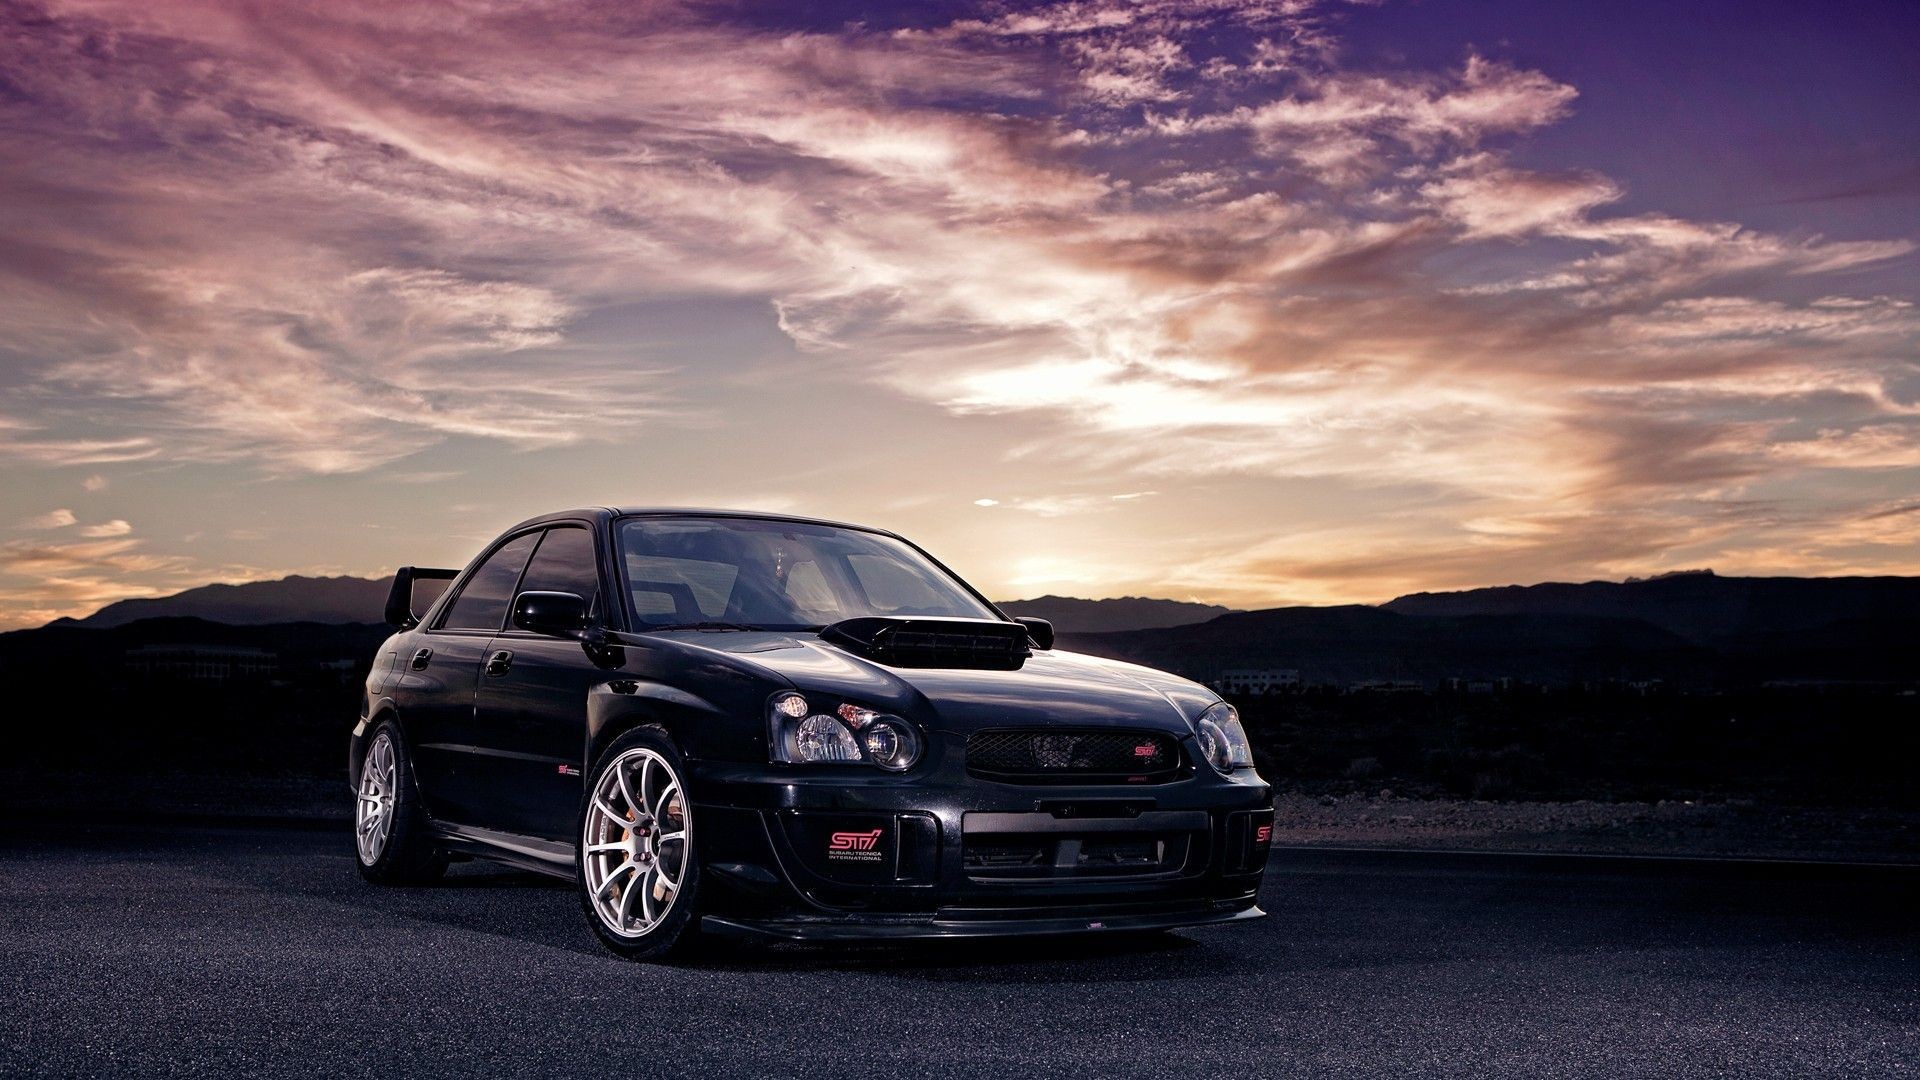 Subaru Wrx Sti Wallpaper Image